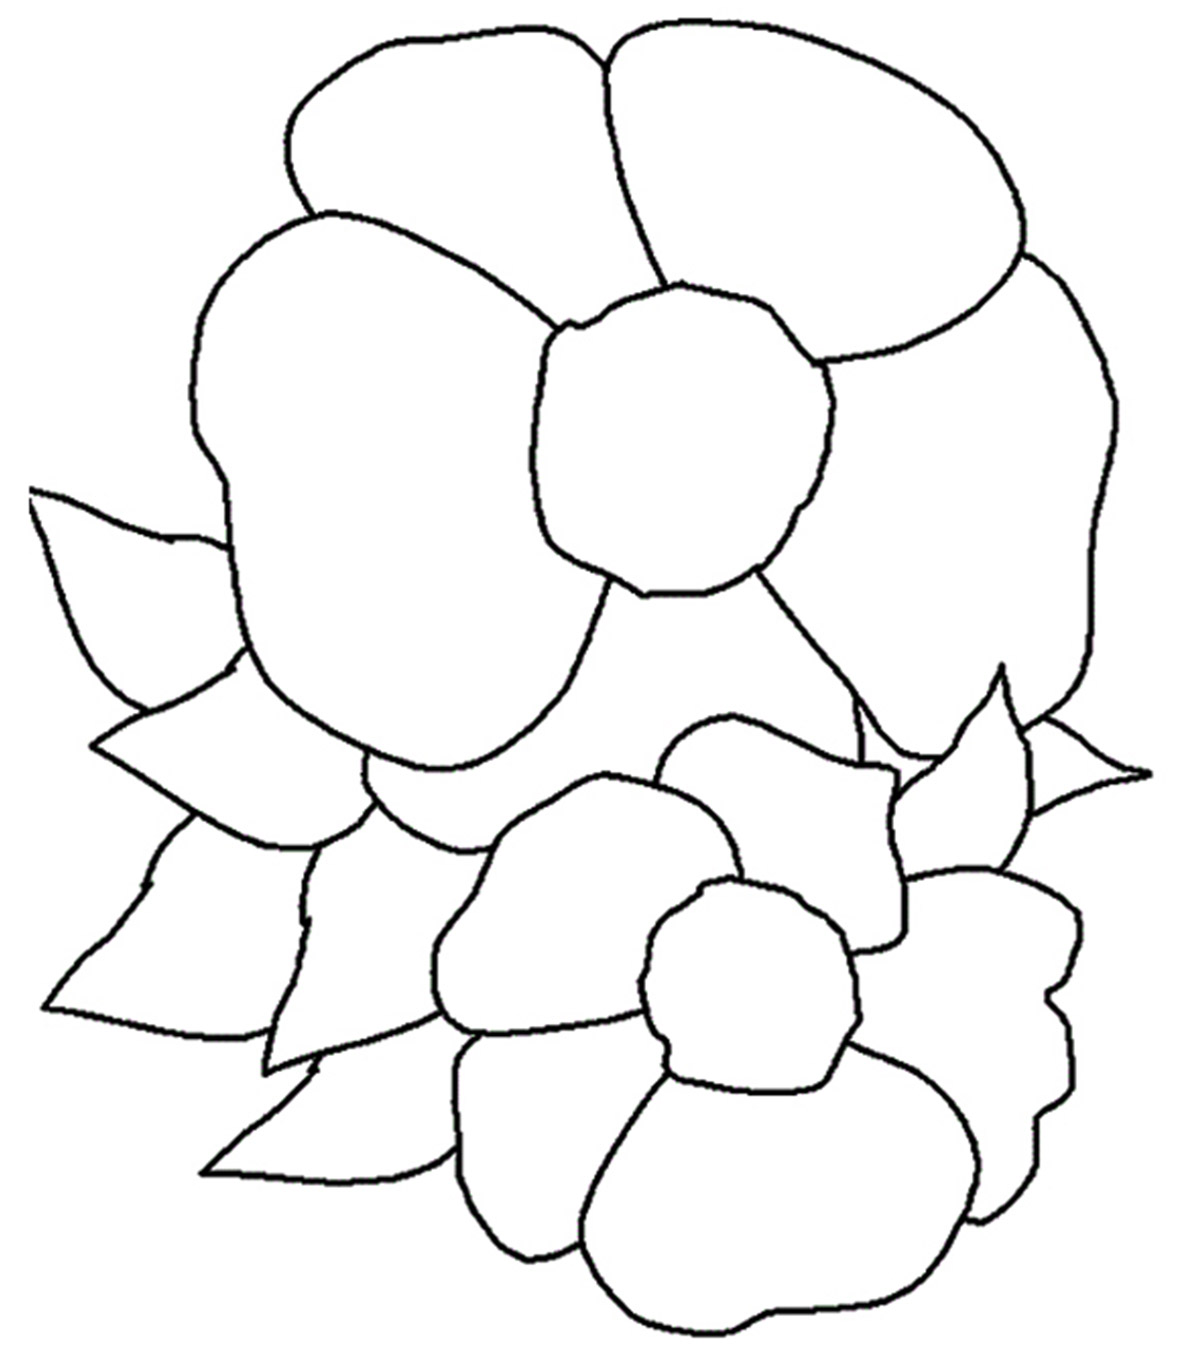 Design your own Dakota Floral worksheet